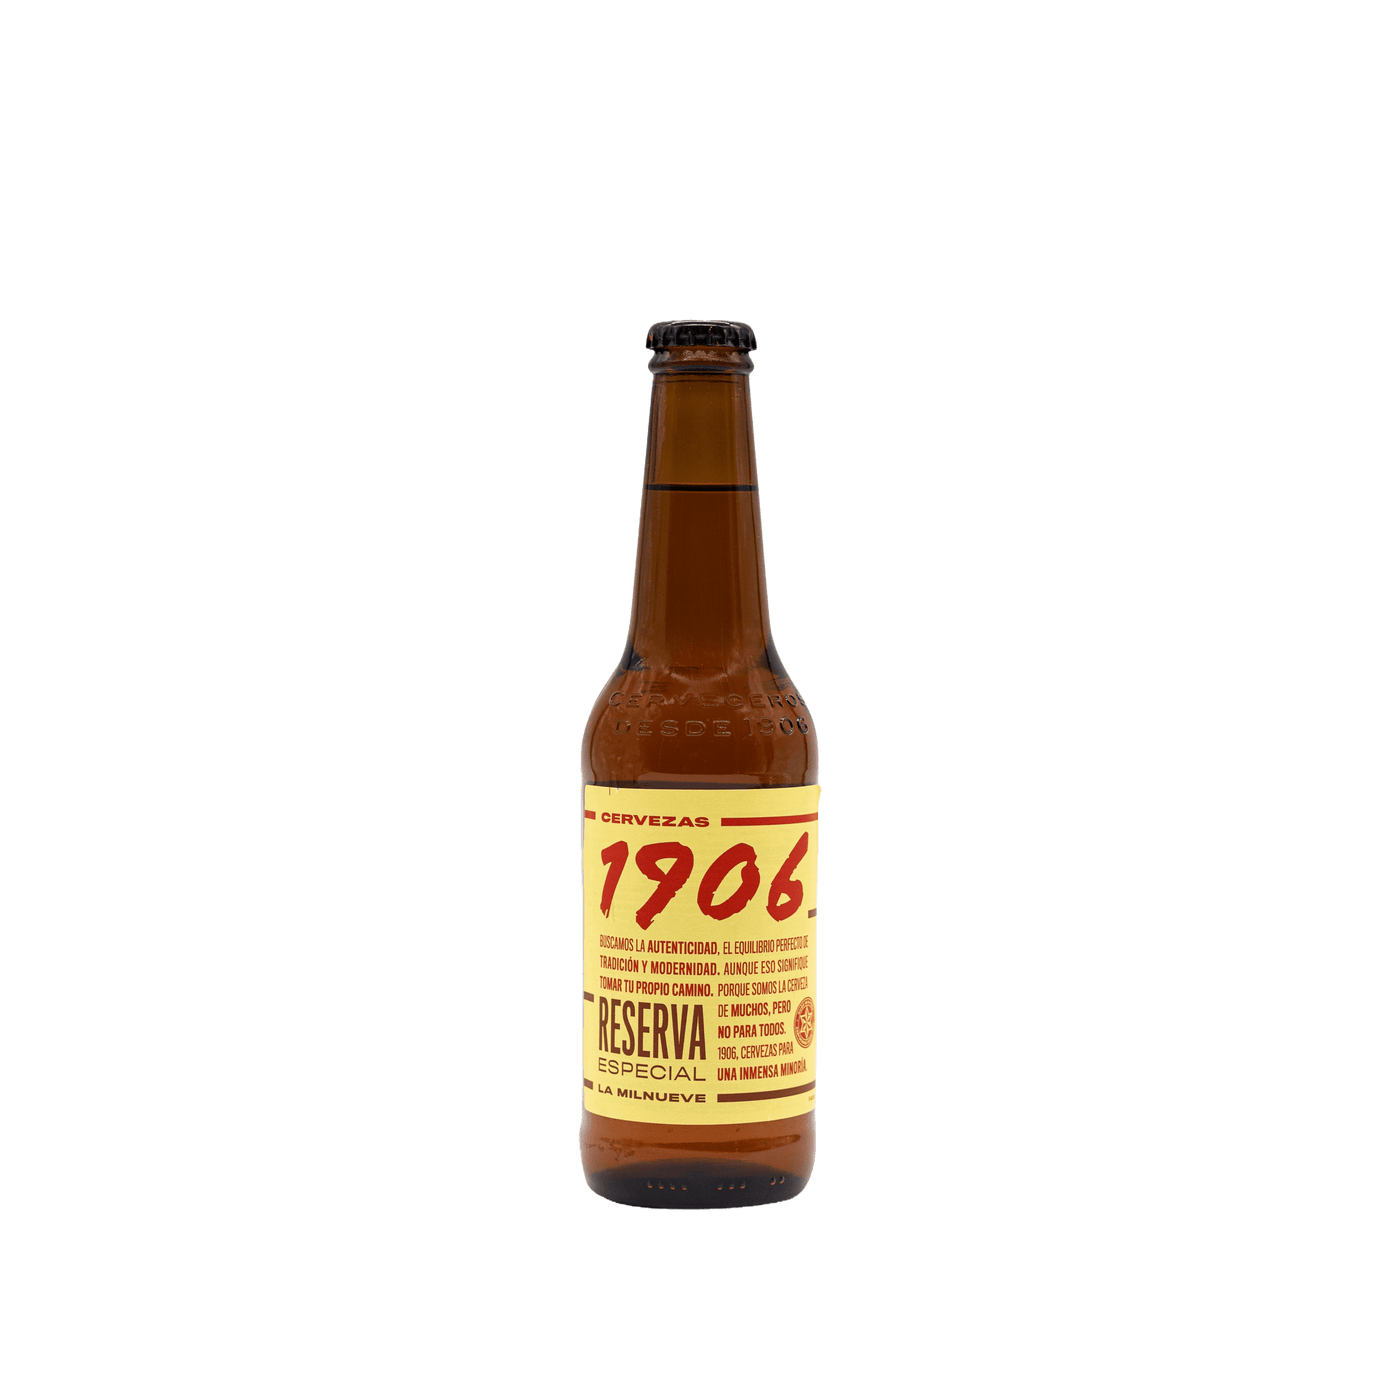 Estrella Galicia 1906 Reserva Lager Beer 330ml (Pack 6 units)